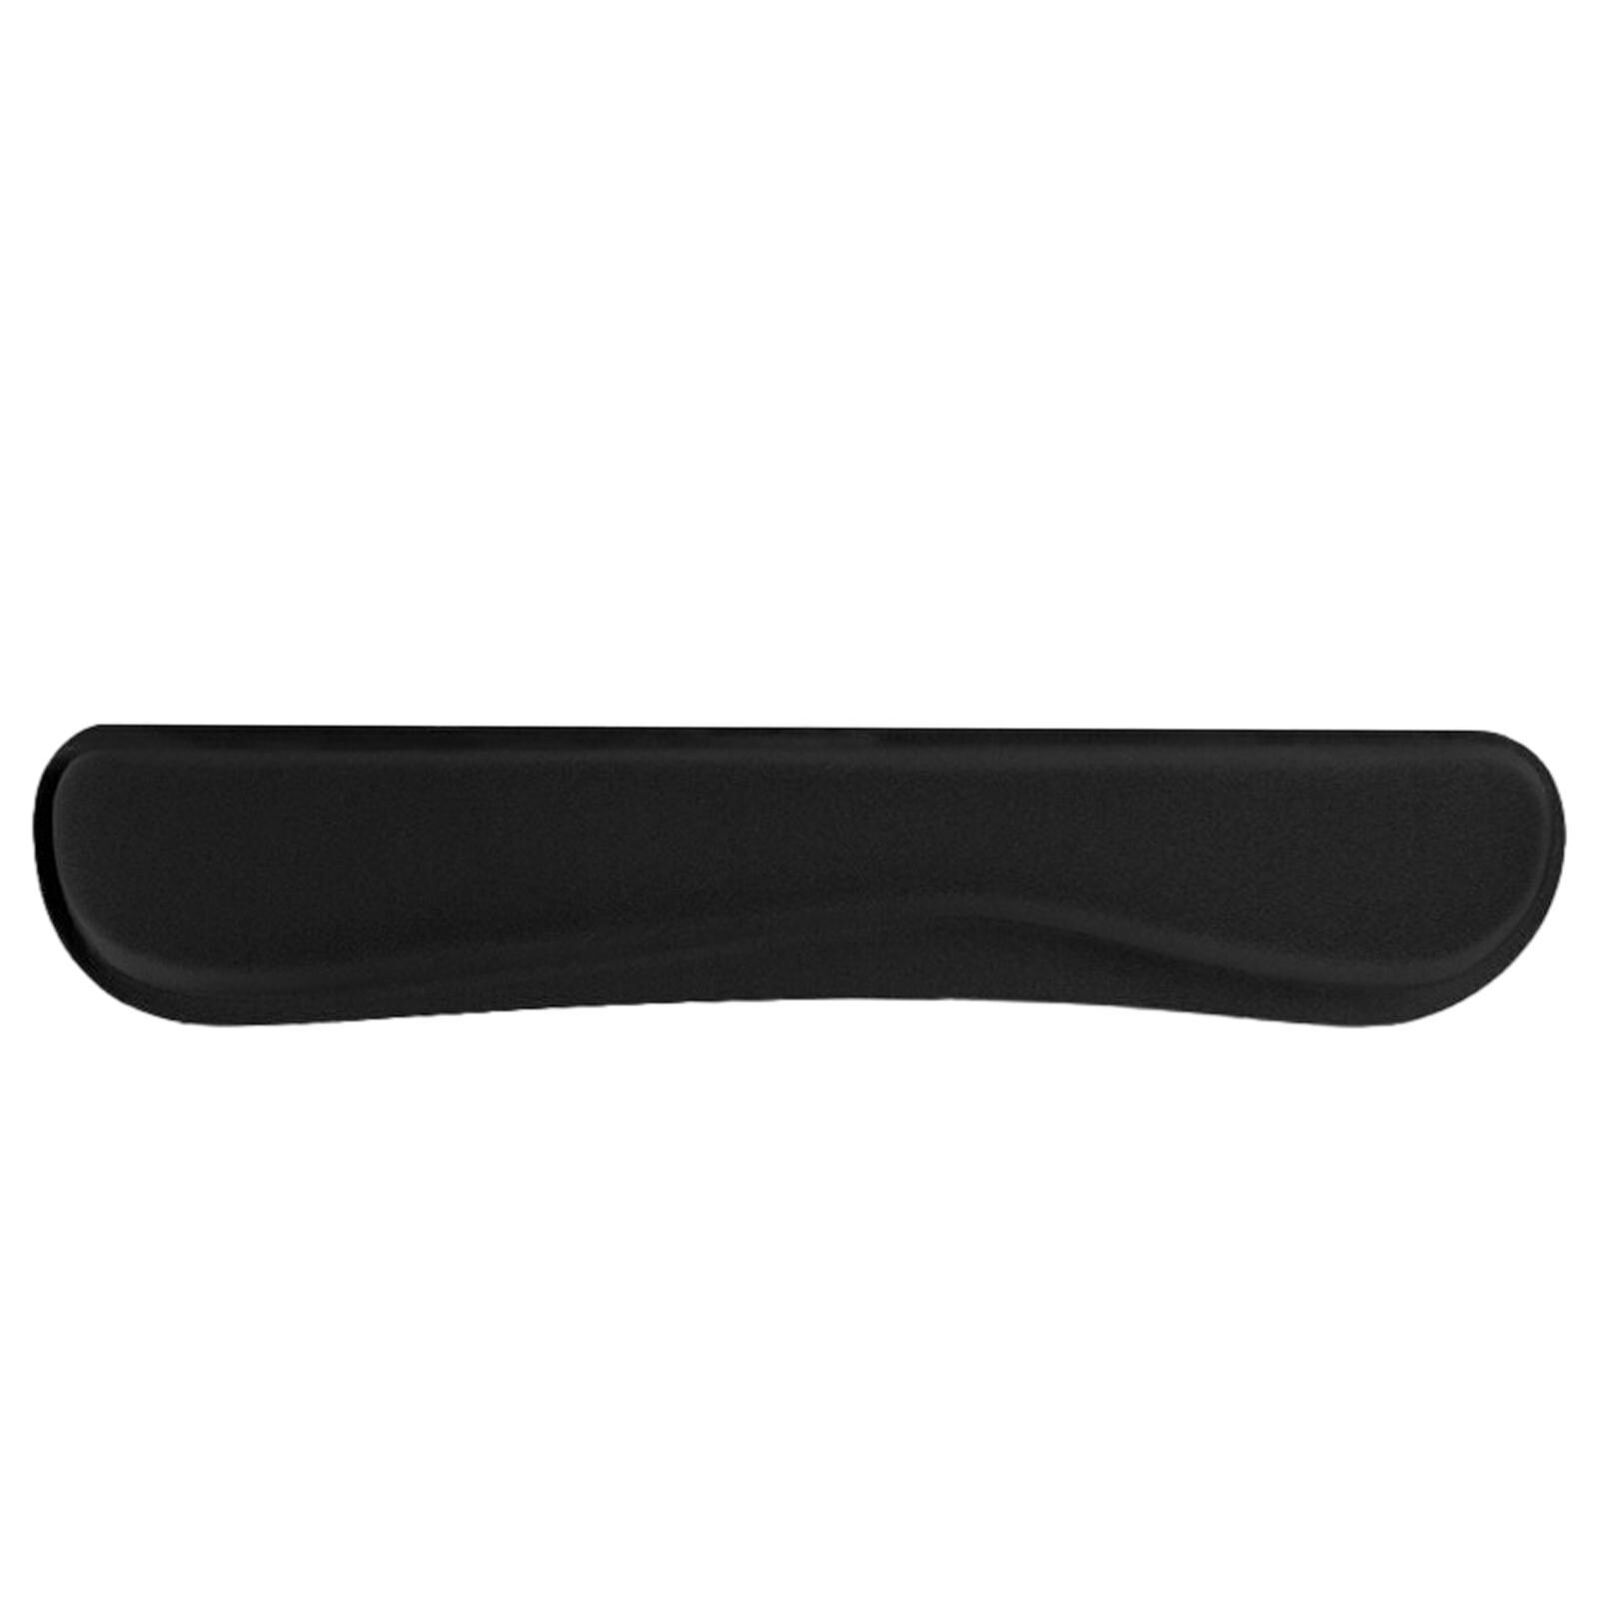 2Pcs Keyboard Wrist Rest Pad Mouse Pad EVA Foam Cushion Wrist Arm Rest Support